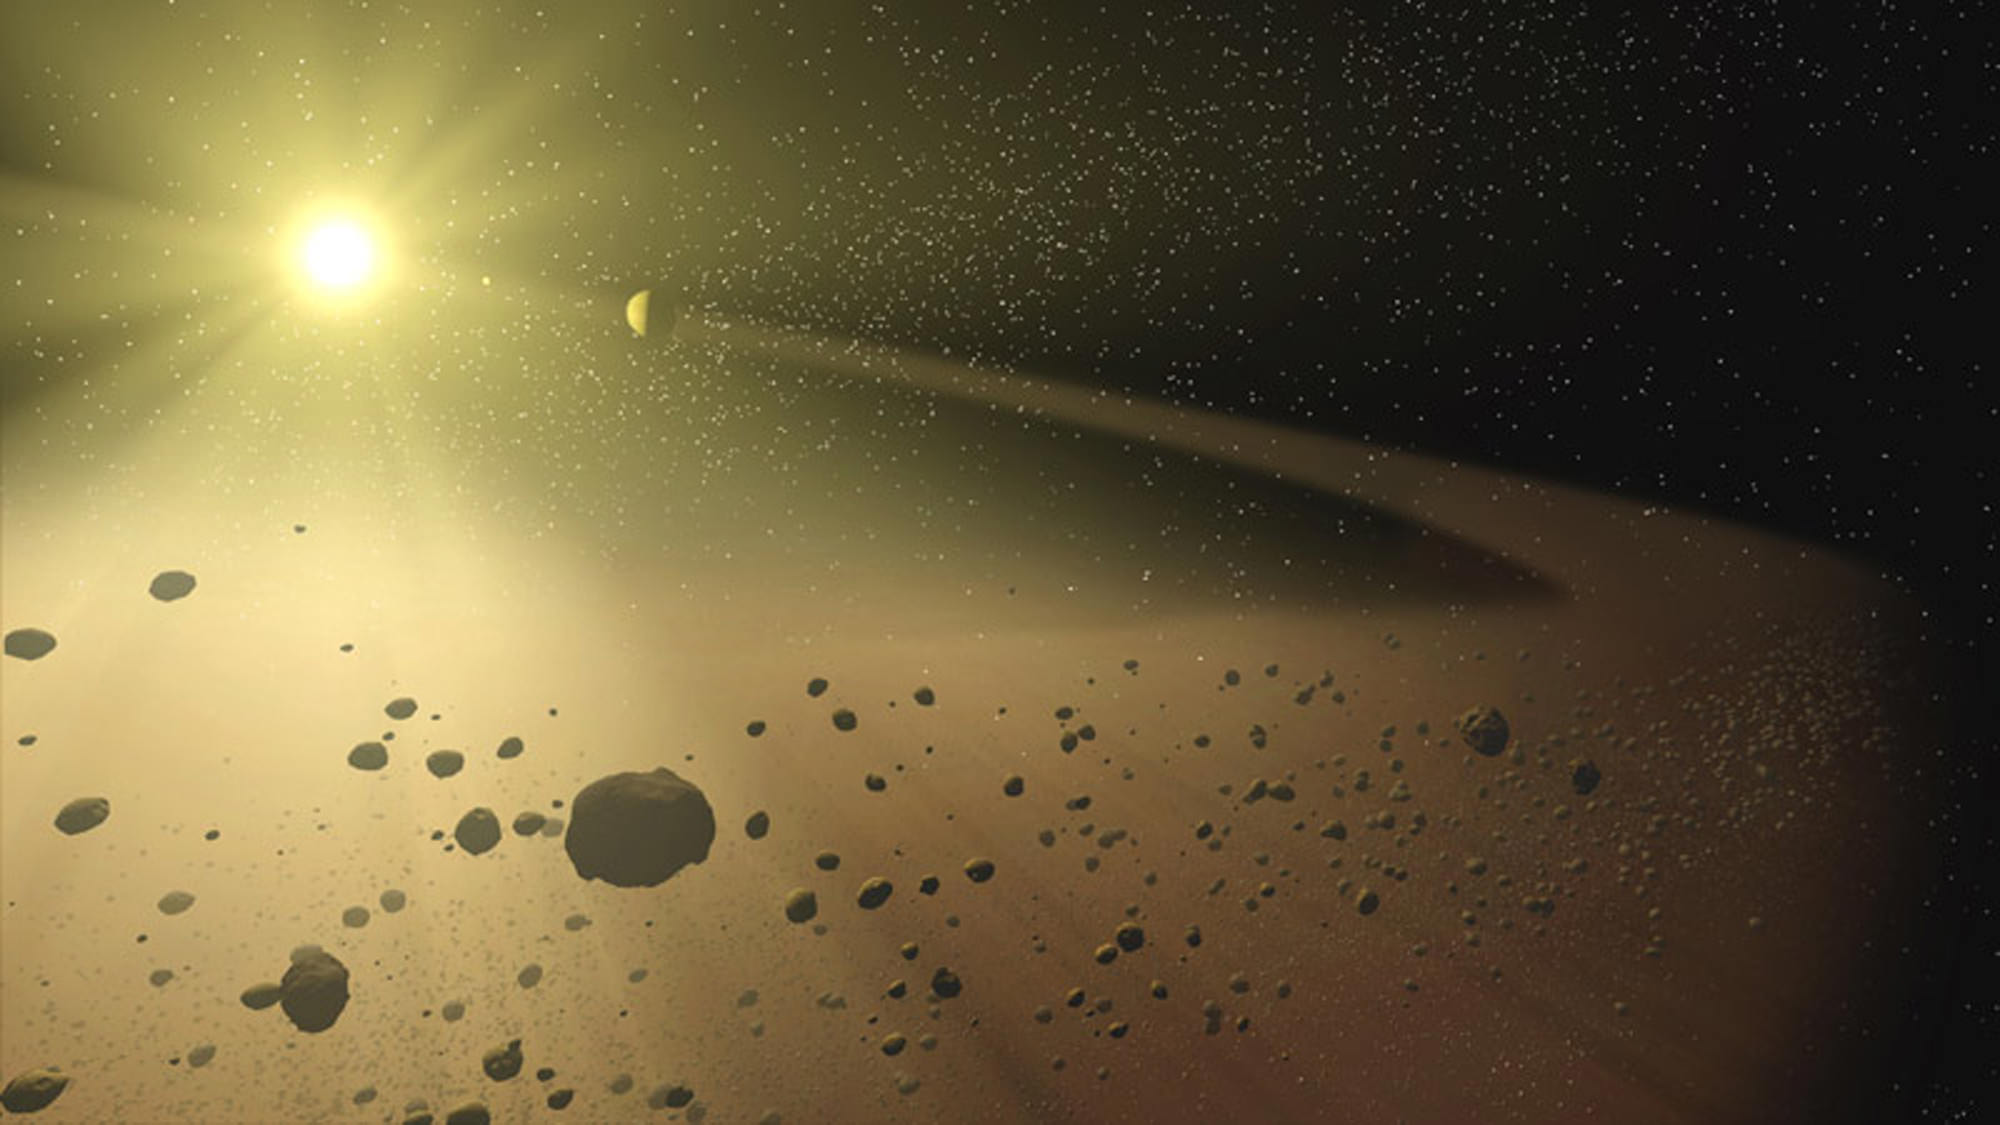 Artist's impression of the asteroid belt. Image credit: NASA/JPL-Caltech